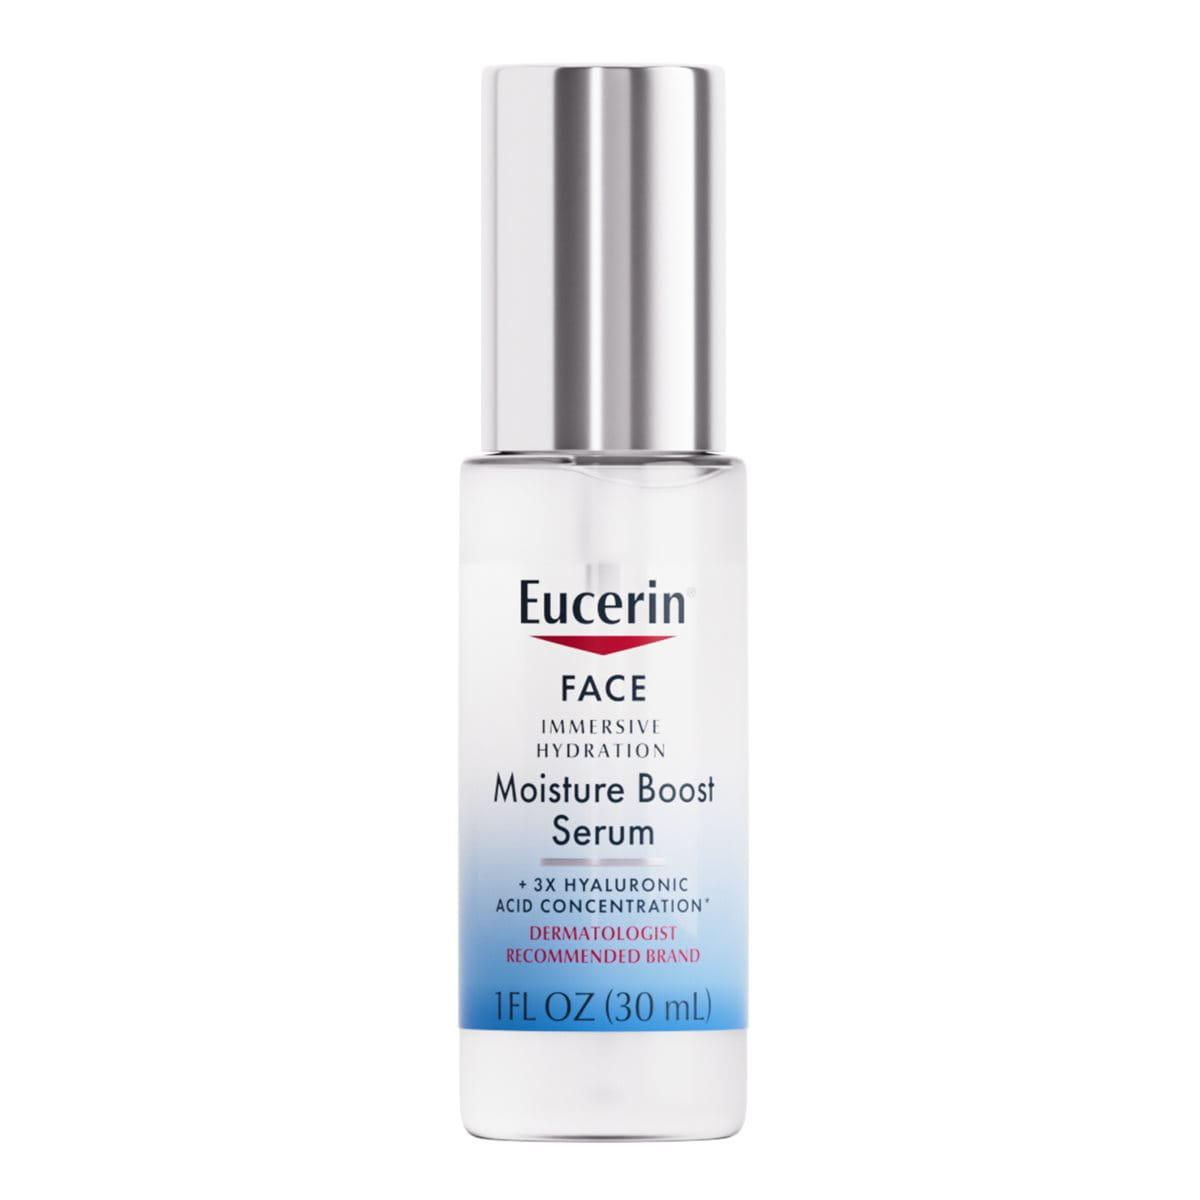 Eucerin® Face Immersive Hydration Moisture Boost Serum